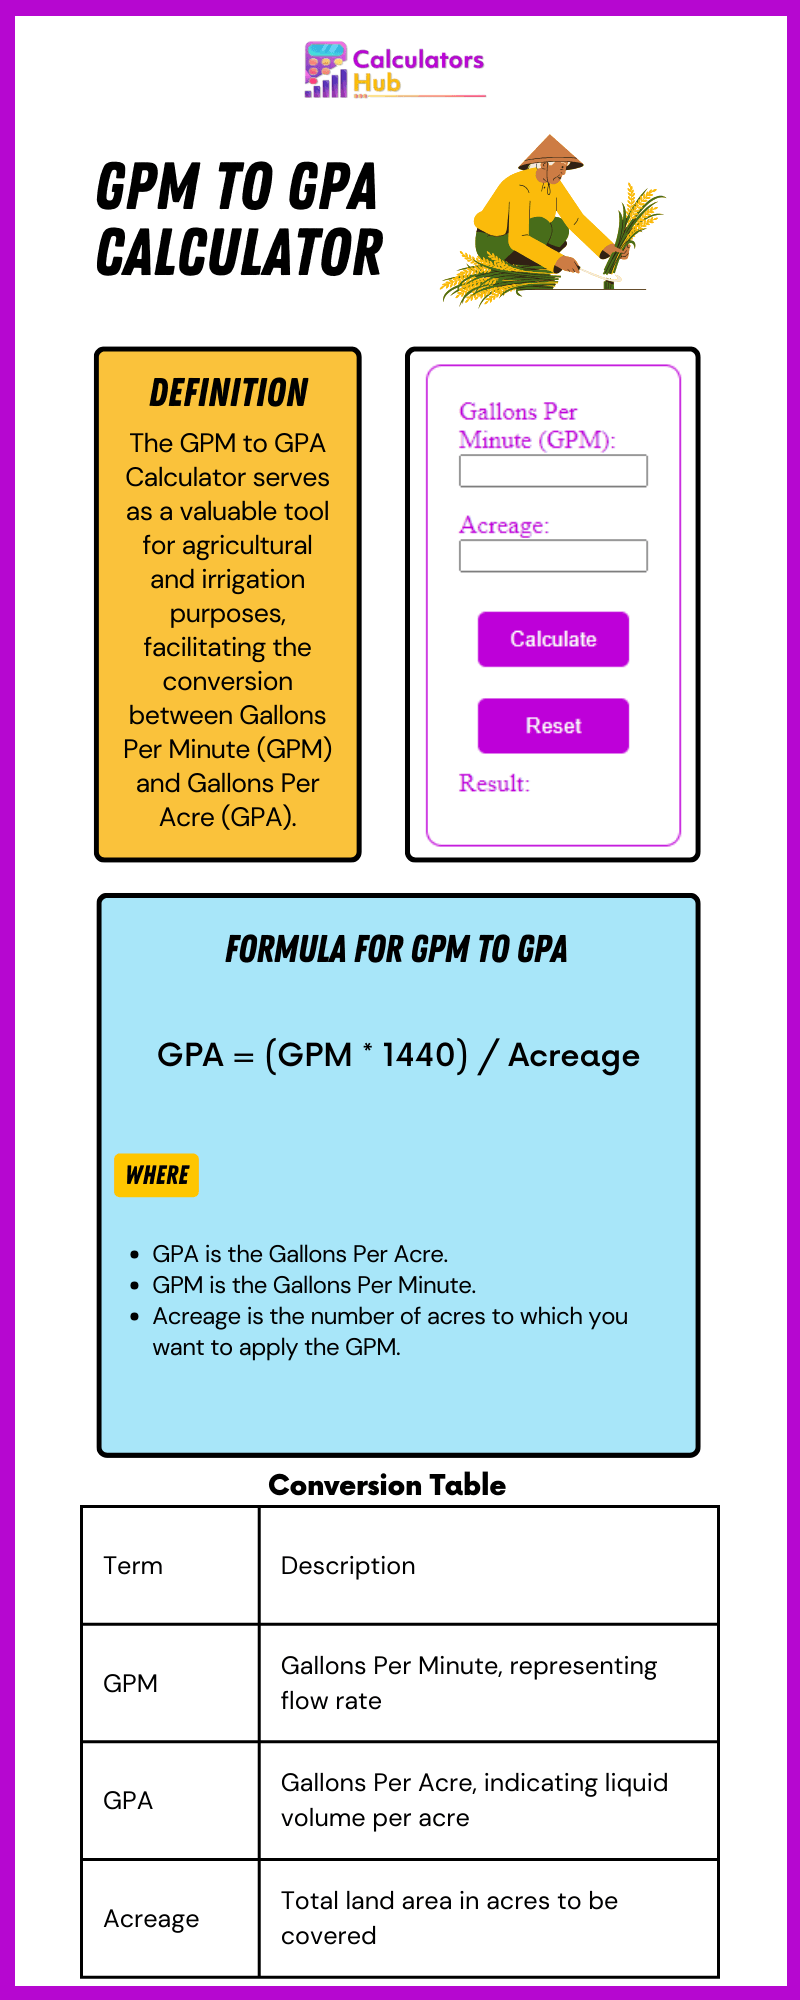 GPM to GPA Calculator